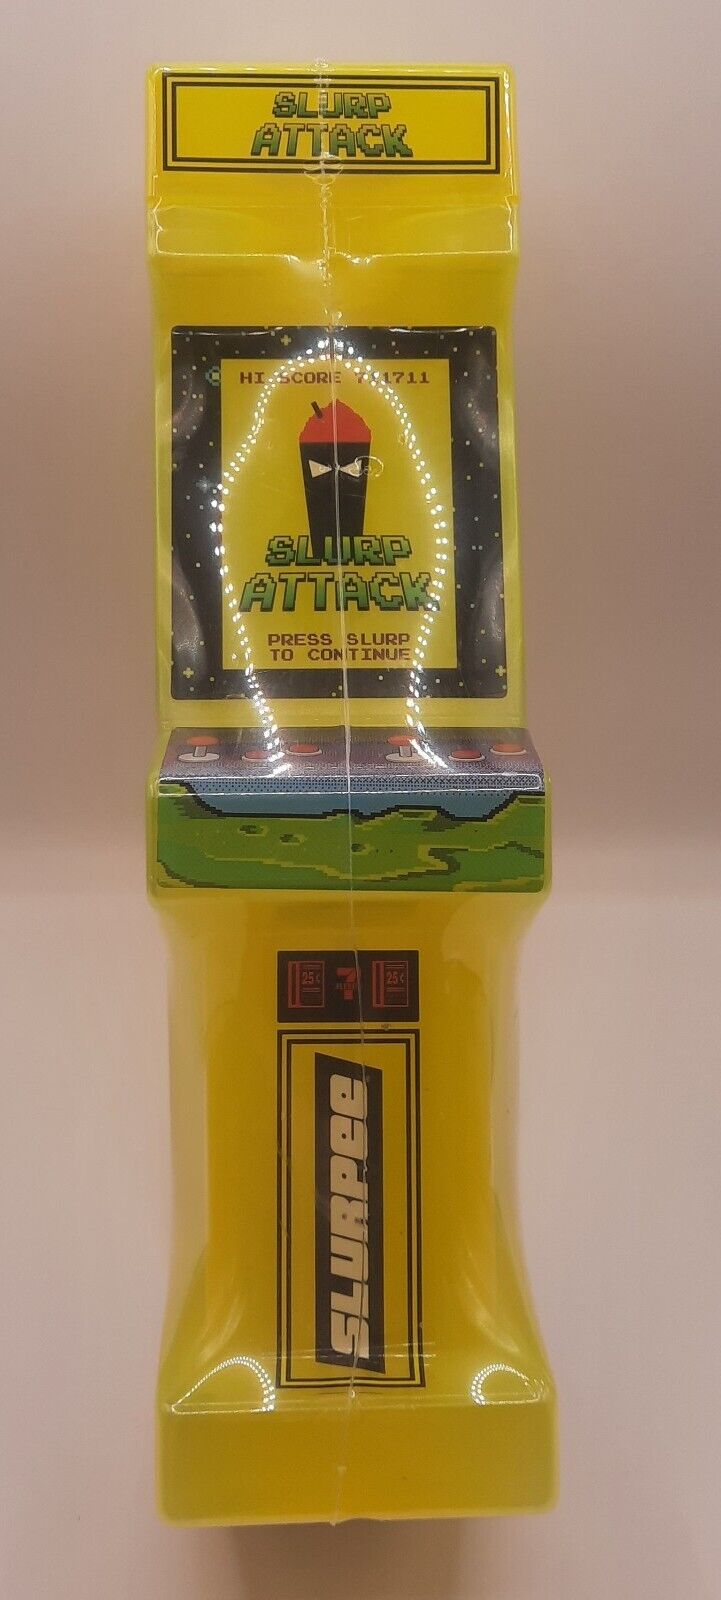 New Neon Yellow Slurpee 7 Eleven Slurp Attack Arcade Video Game Shaped Cup